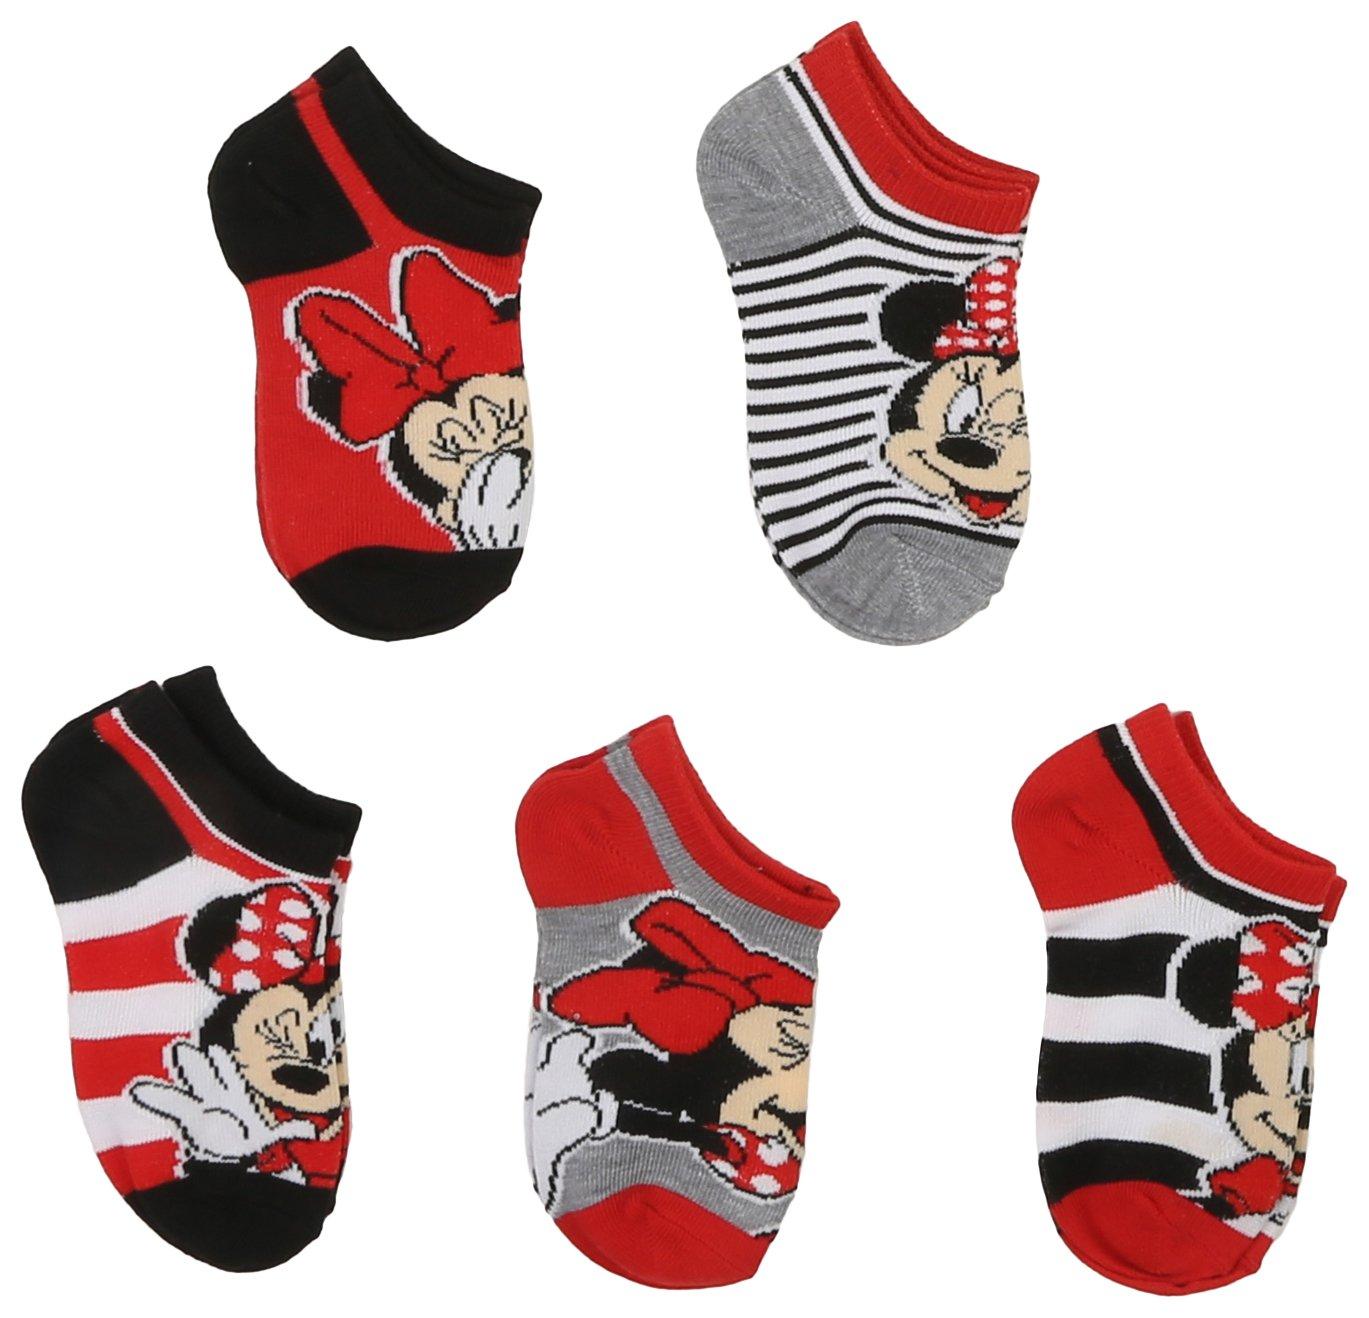 Girils 5-pk. Minnie Mouse No Show Socks